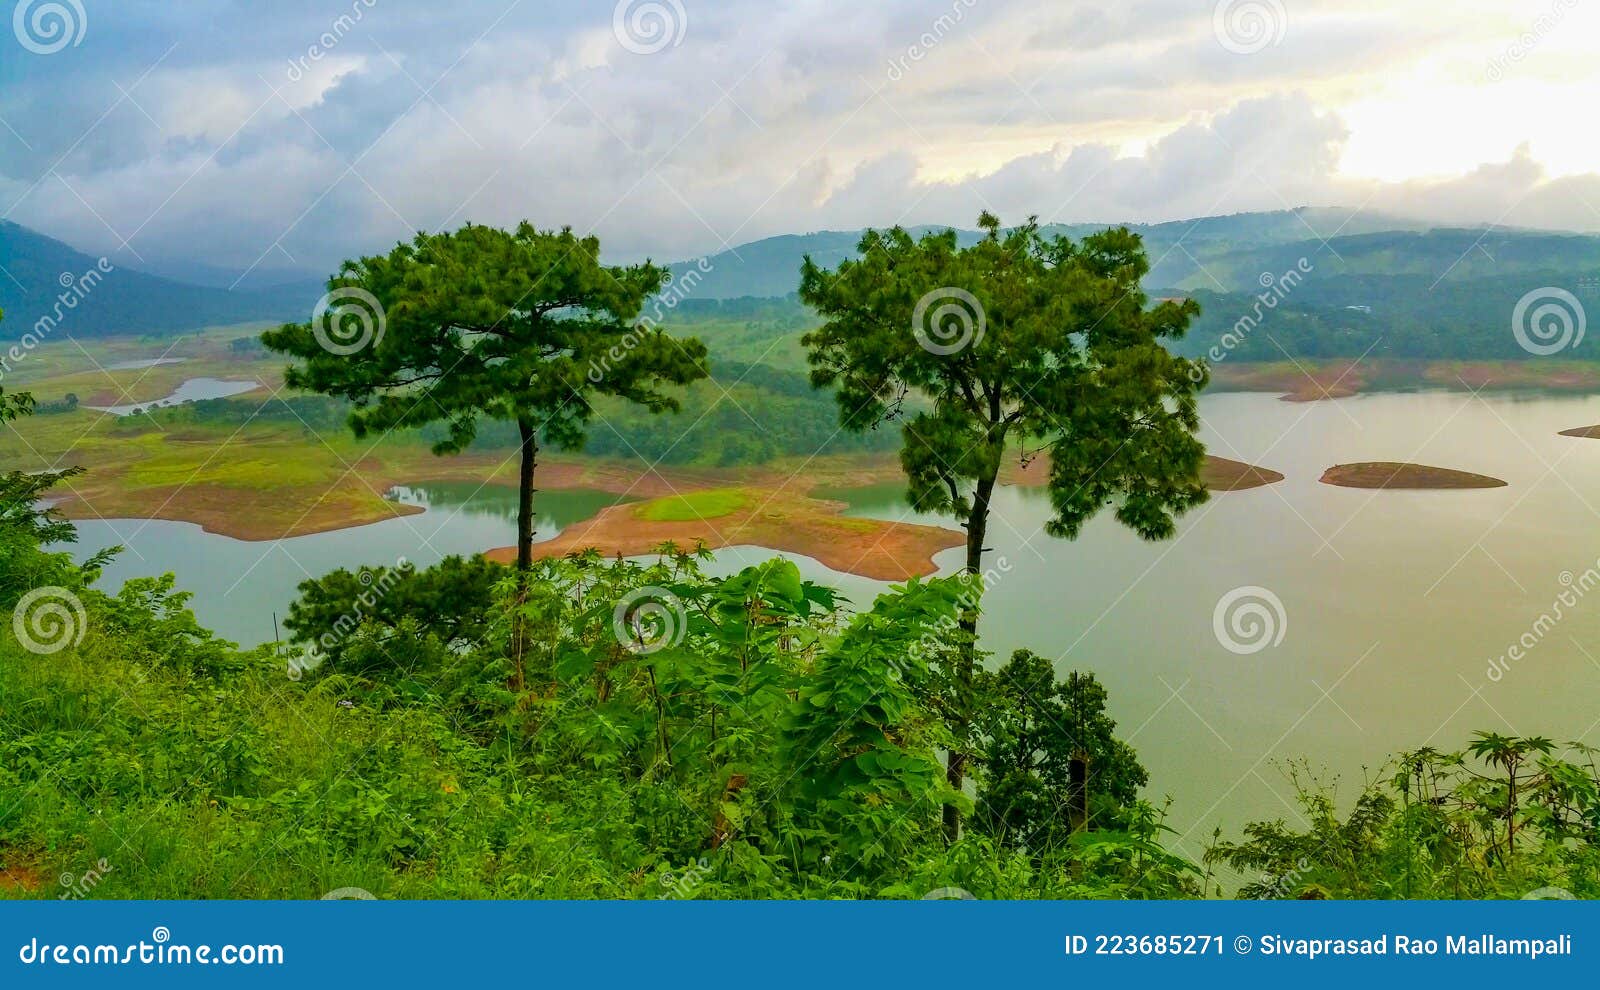 My India - umiam(barapani) lake, Shillong, meghalaya..... | Facebook